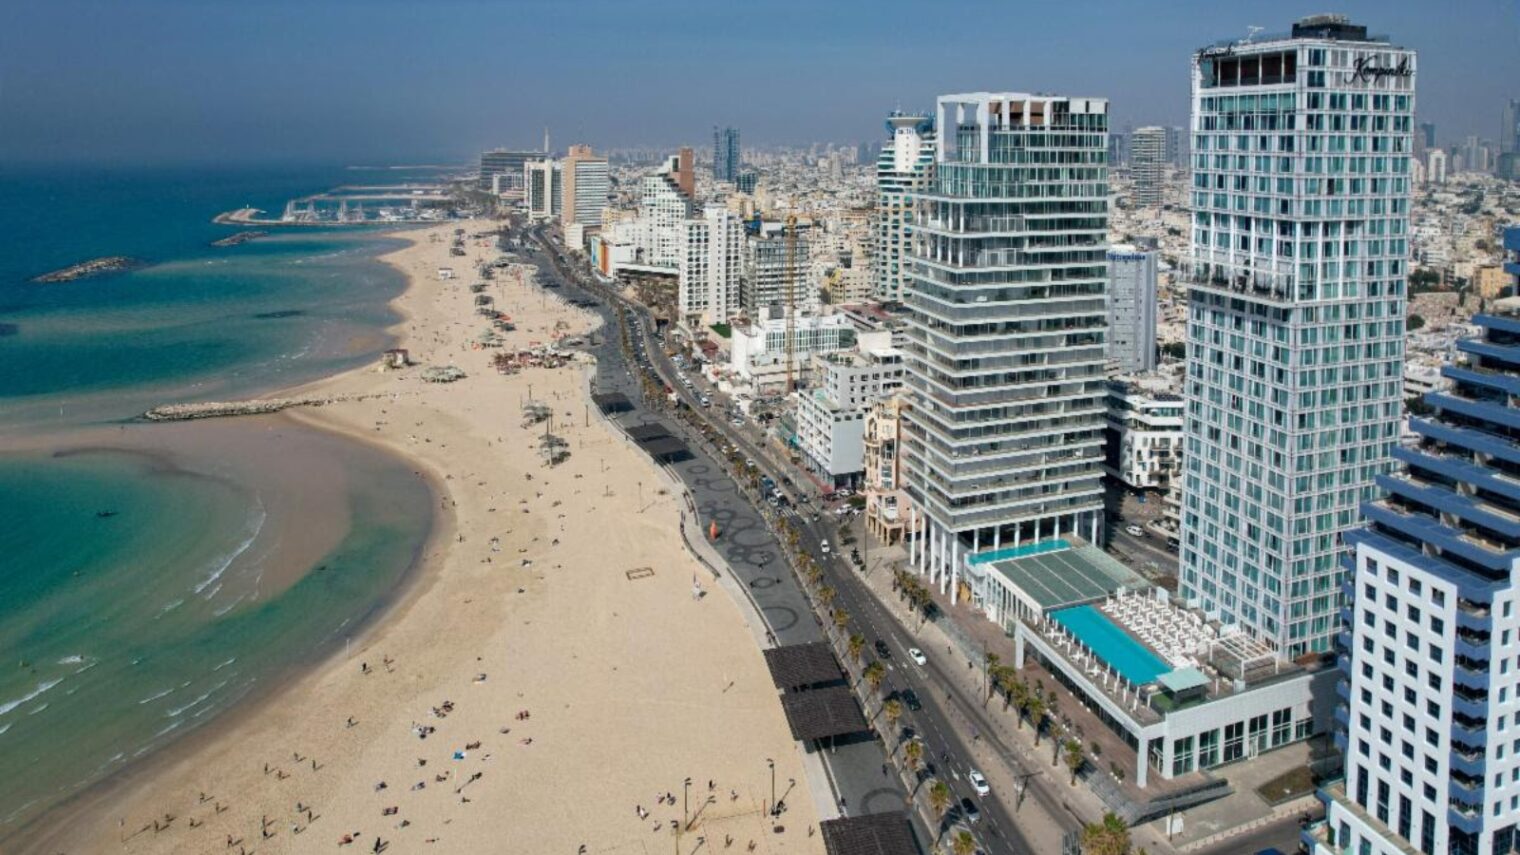 The David Kempinski hotel on the Tel Aviv waterfront. Photo courtesy of the Kempinski Group